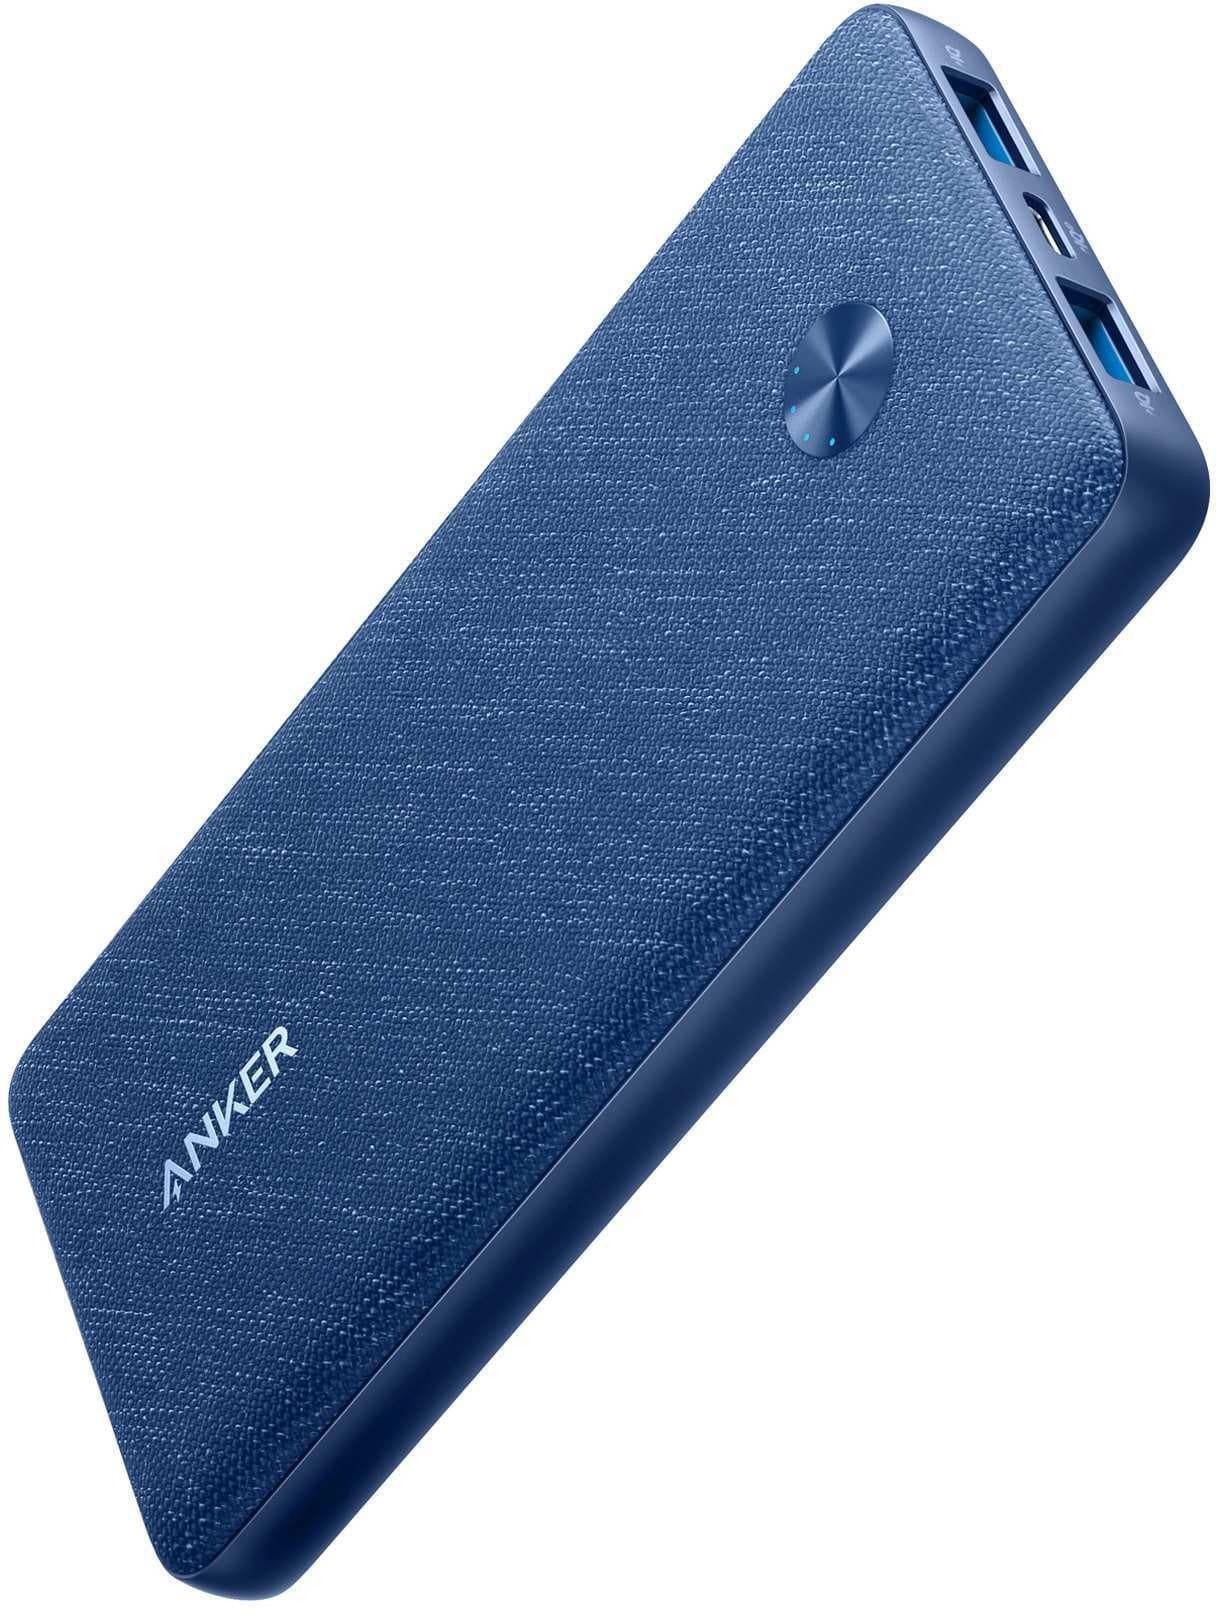 Anker PowerCore III Sense Portable Power Bank PD 10000mAh Blue